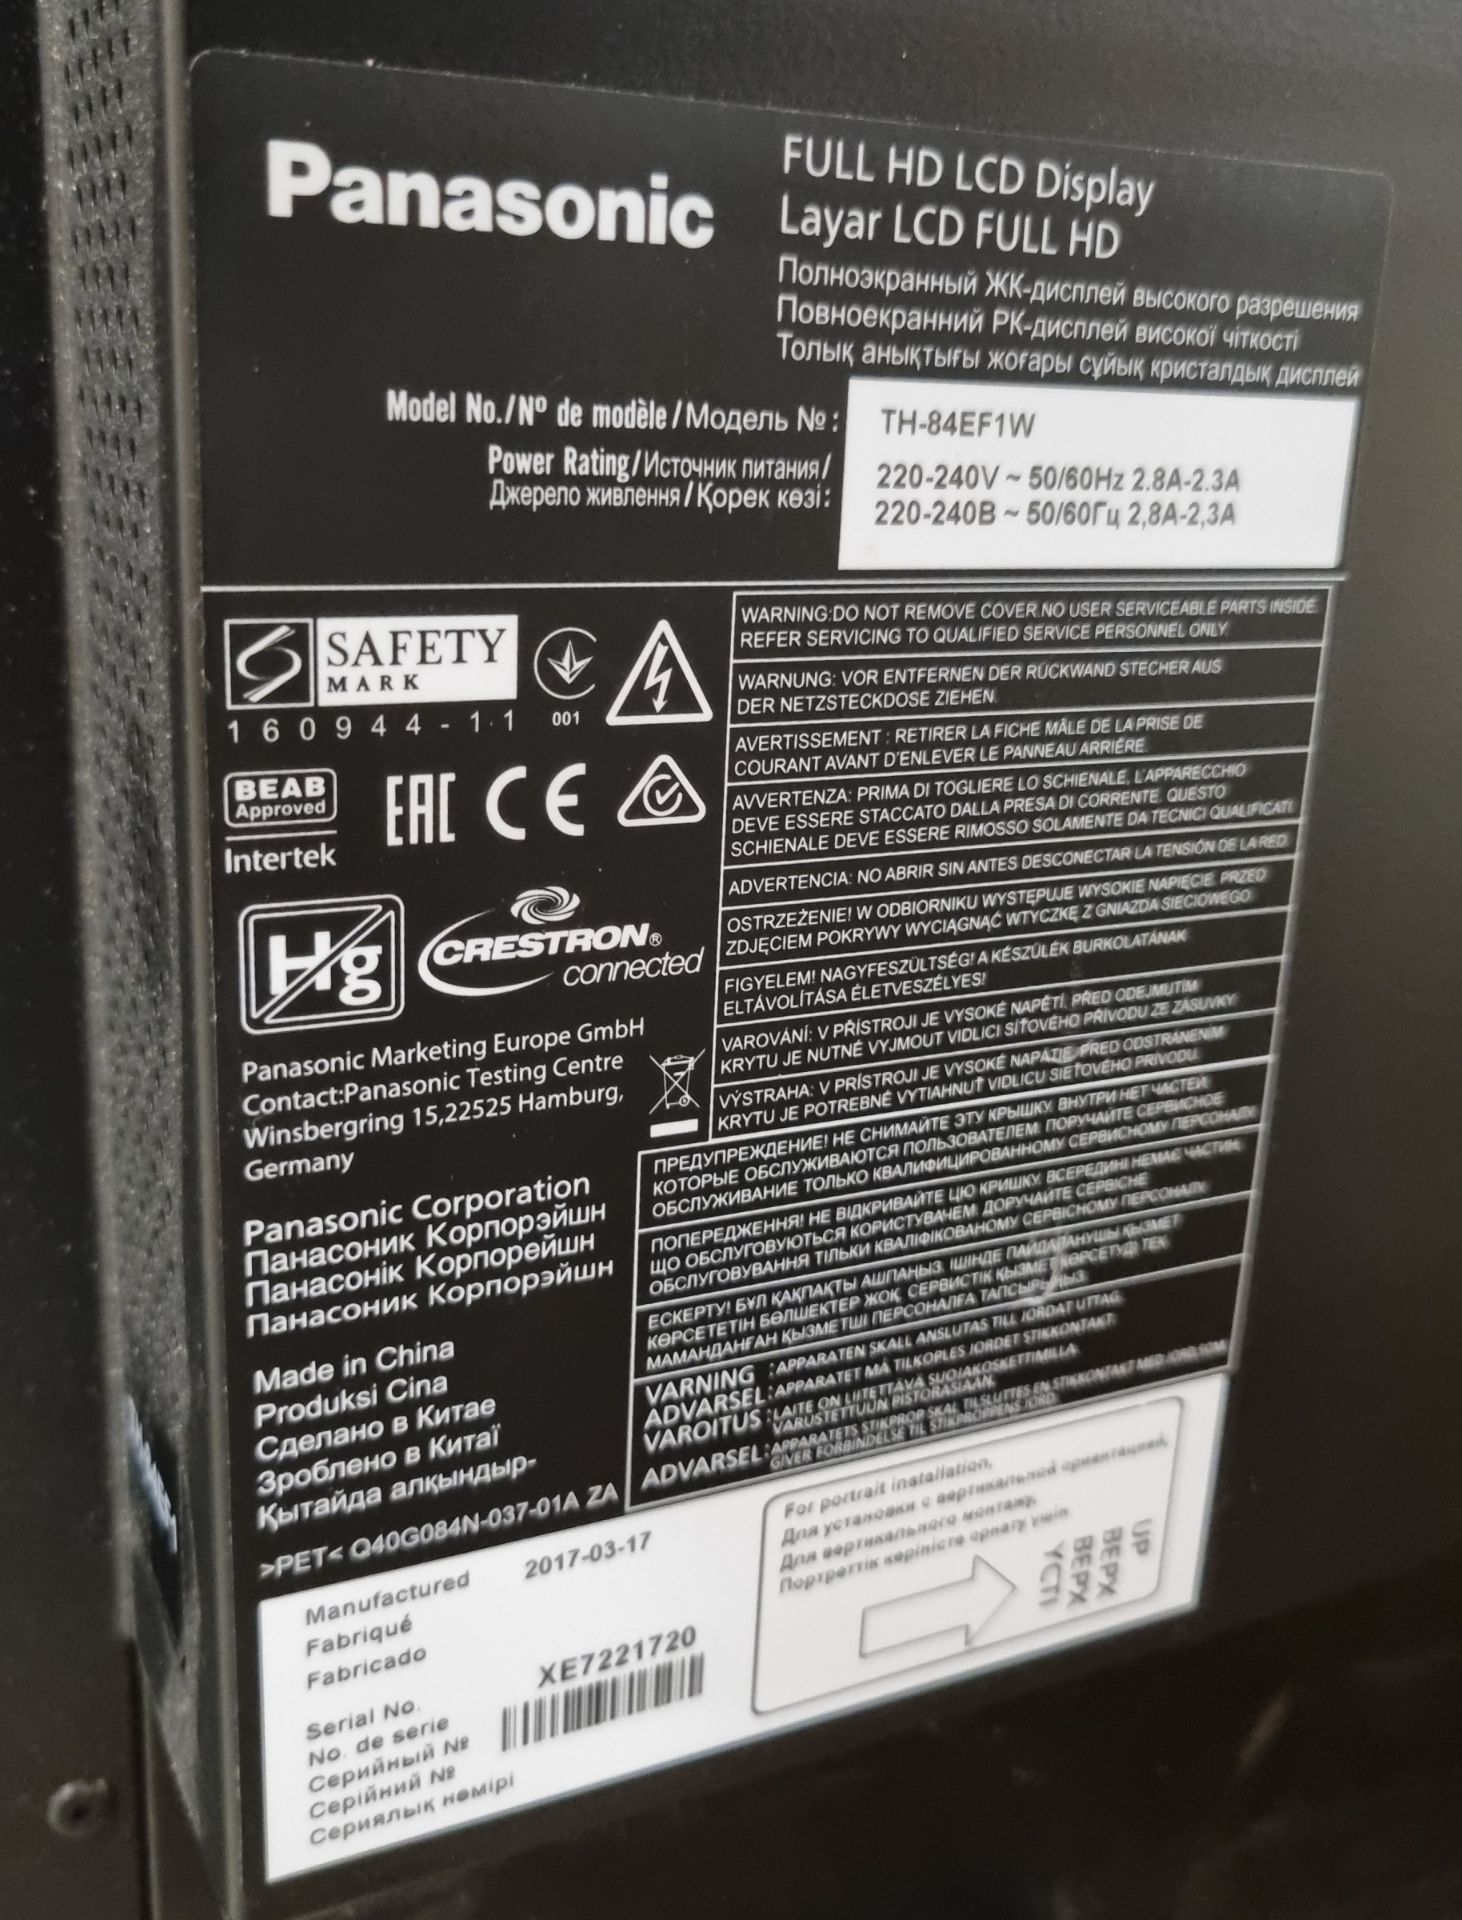 Panasonic TH-84EF1W 84 inch LED-backlit full HD LCD display - Image 4 of 5